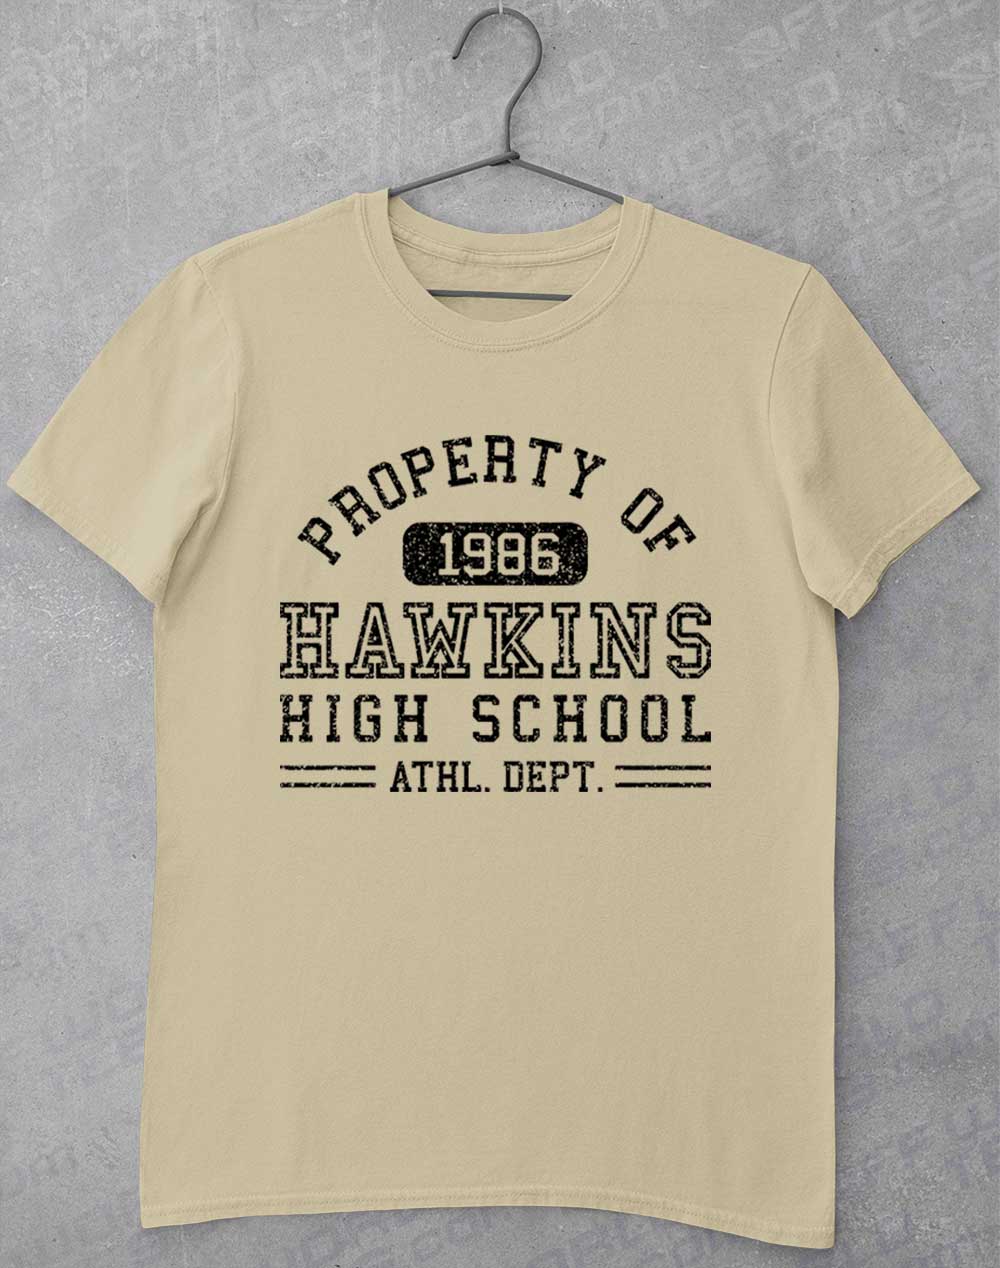 Sand - Hawkins High School Athletics 1986 T-Shirt